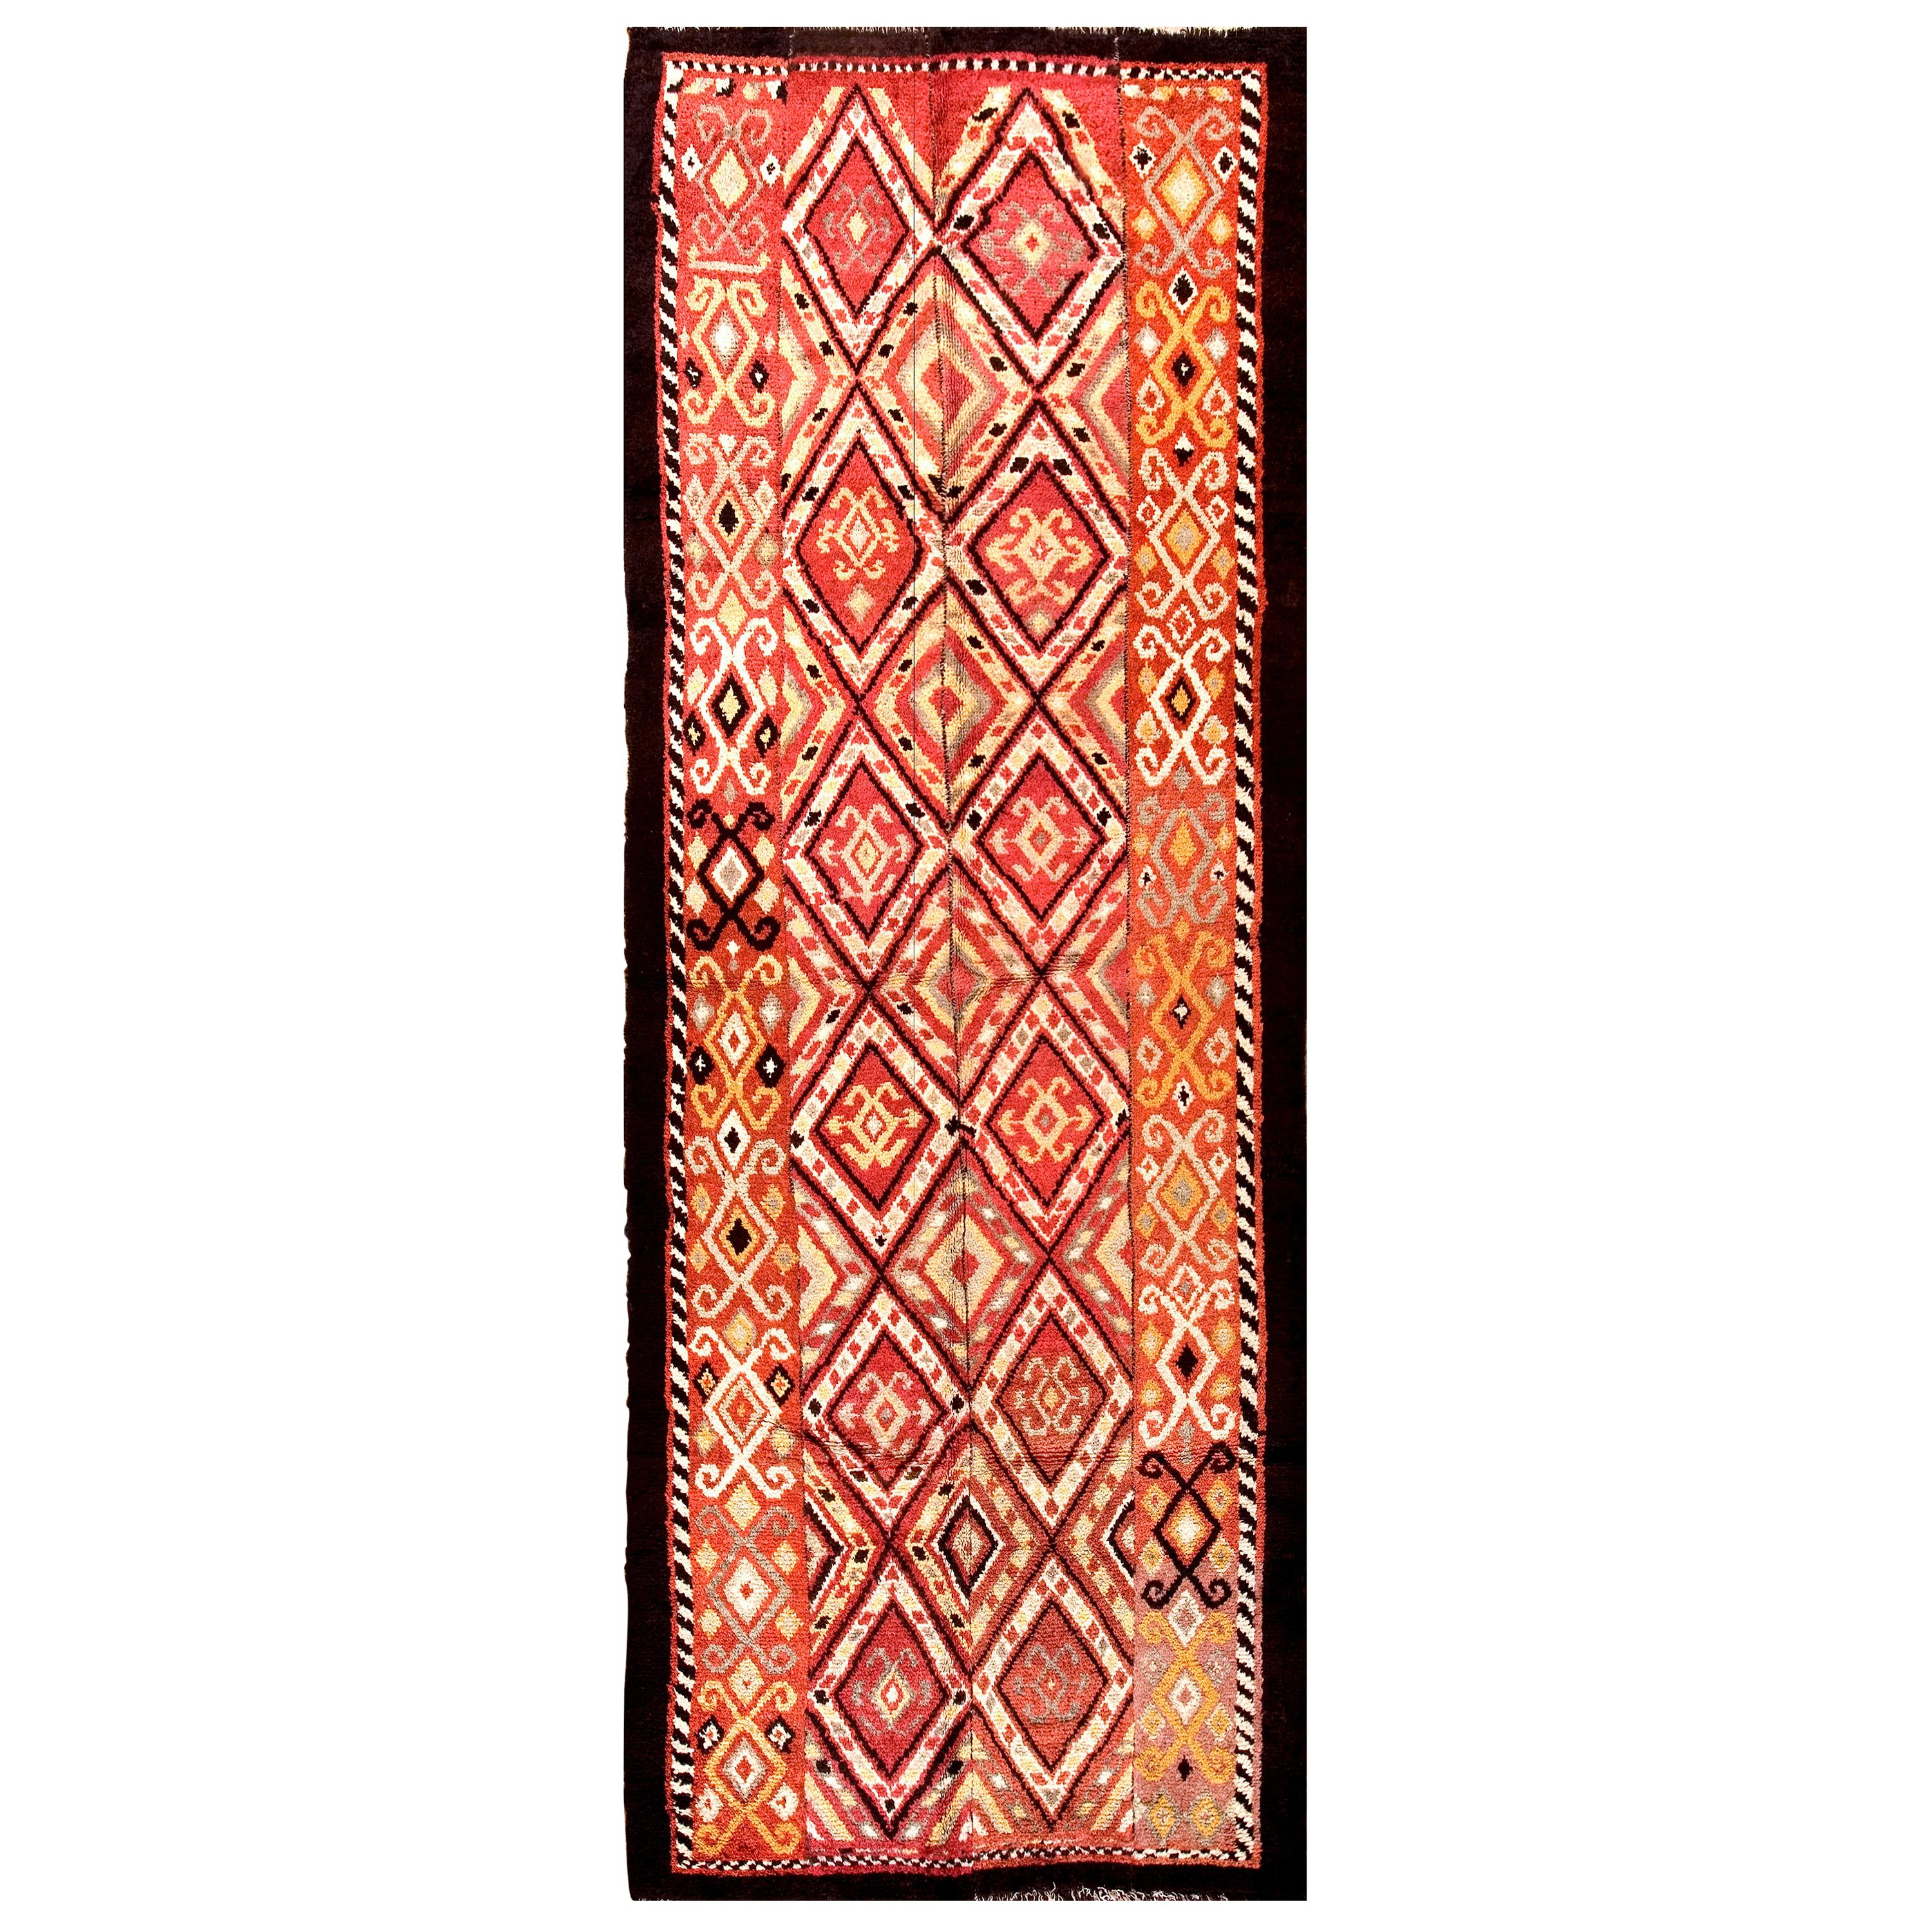 Late 19th Century Uzbek Julkhir Carpet ( 5' 2" x 14' 8" - 157 x 447 cm ) For Sale